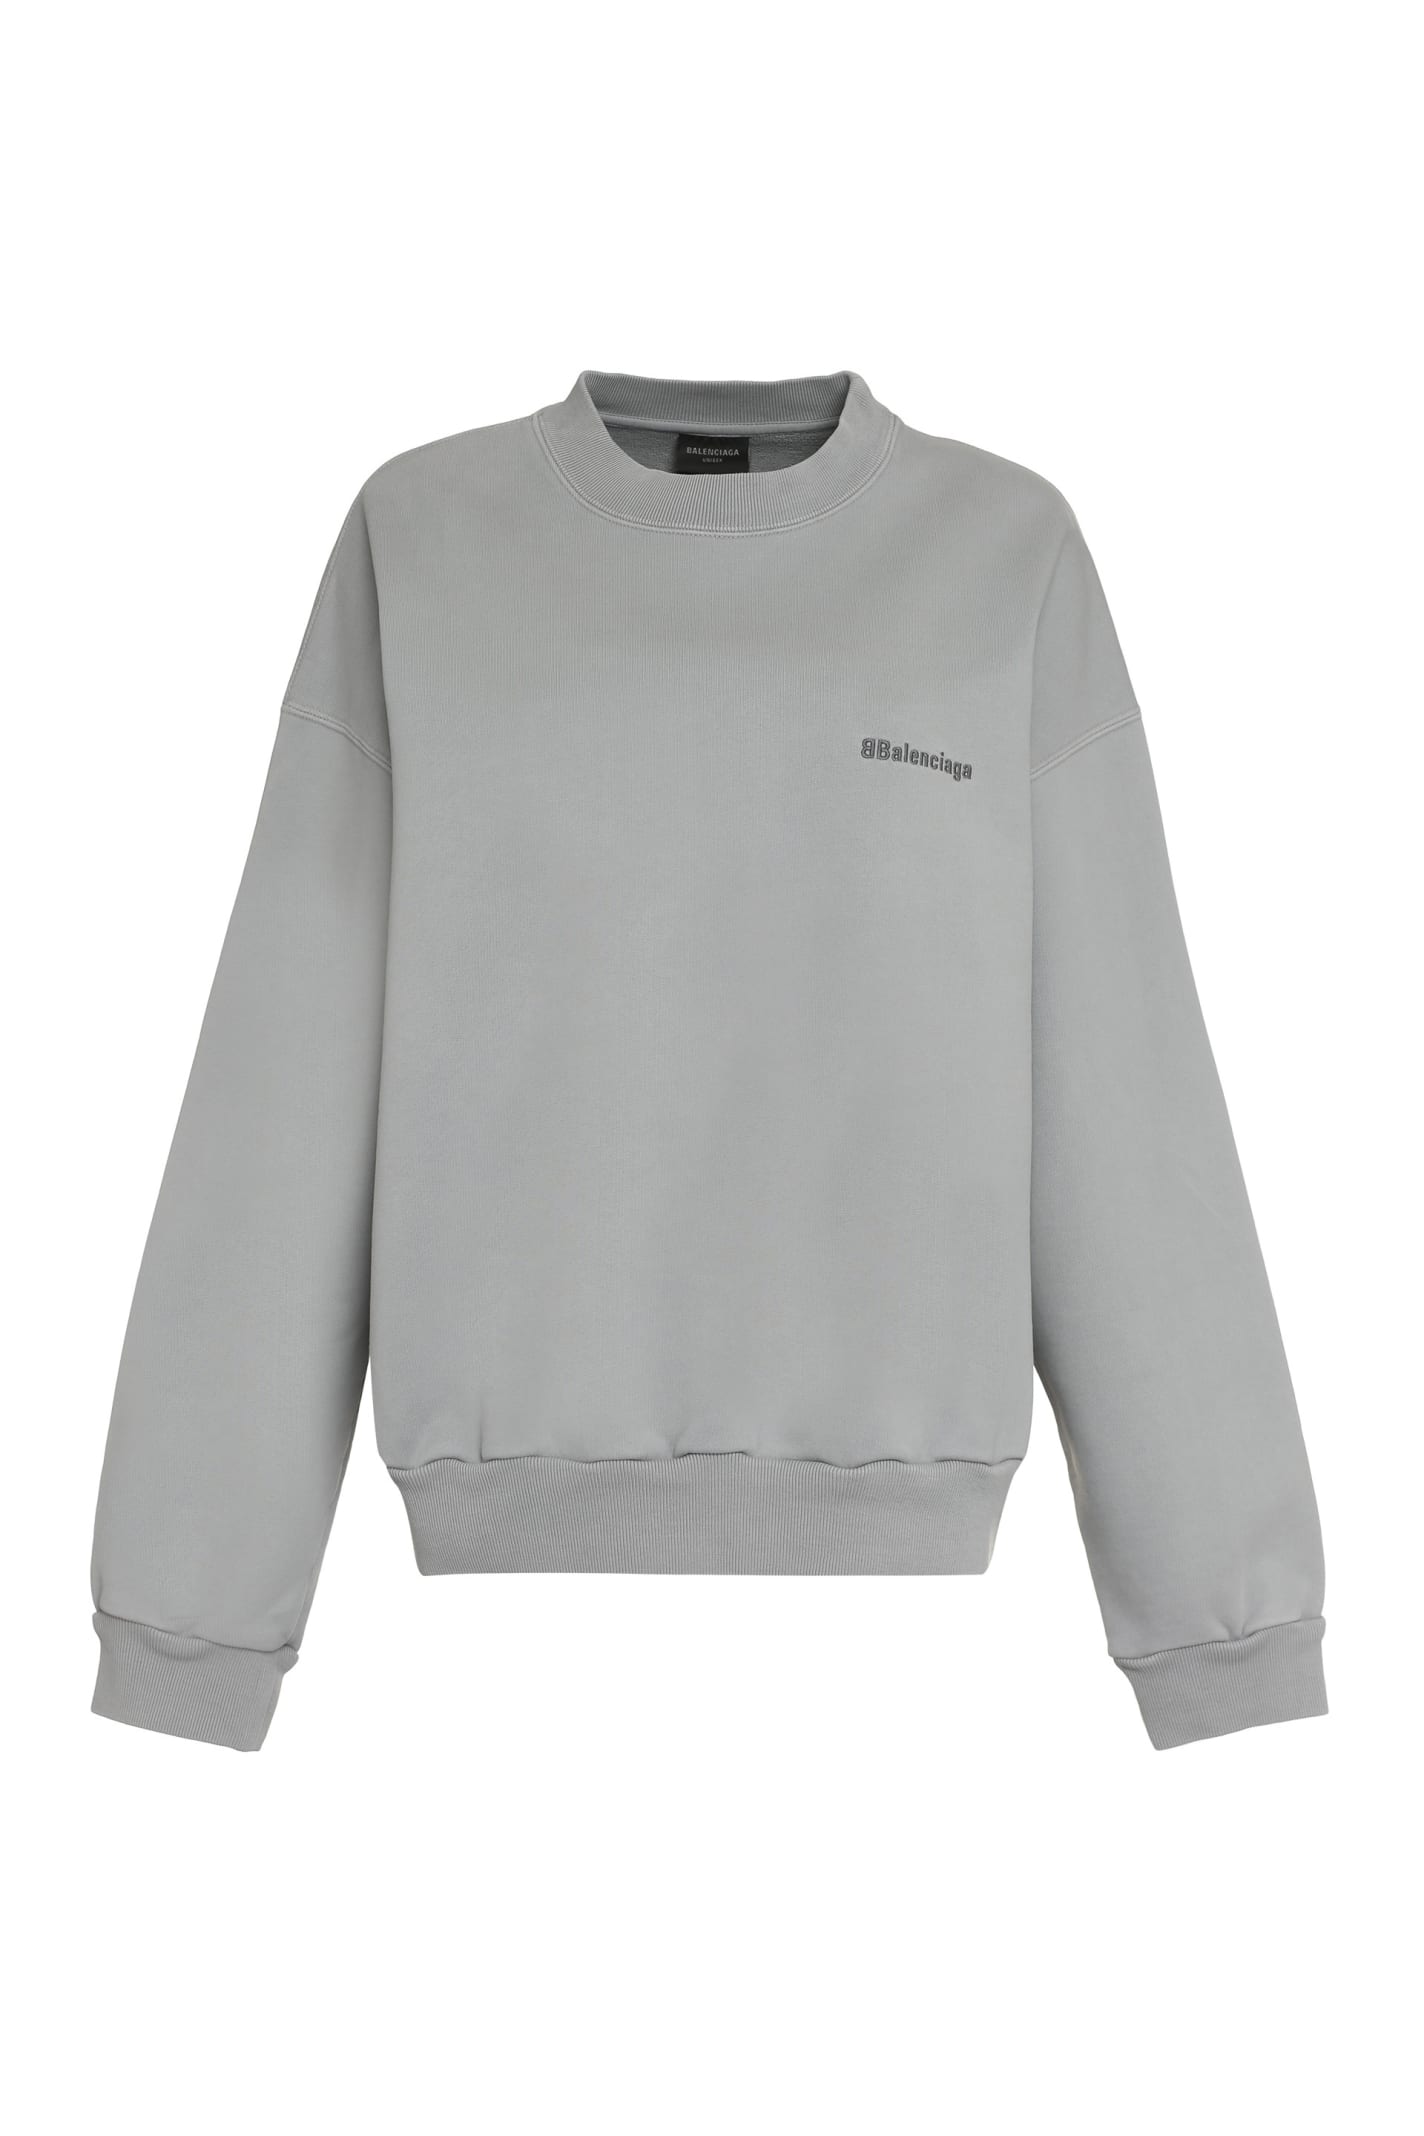 Balenciaga Black Repatch Distressed Logo Sweater for Men  Lyst